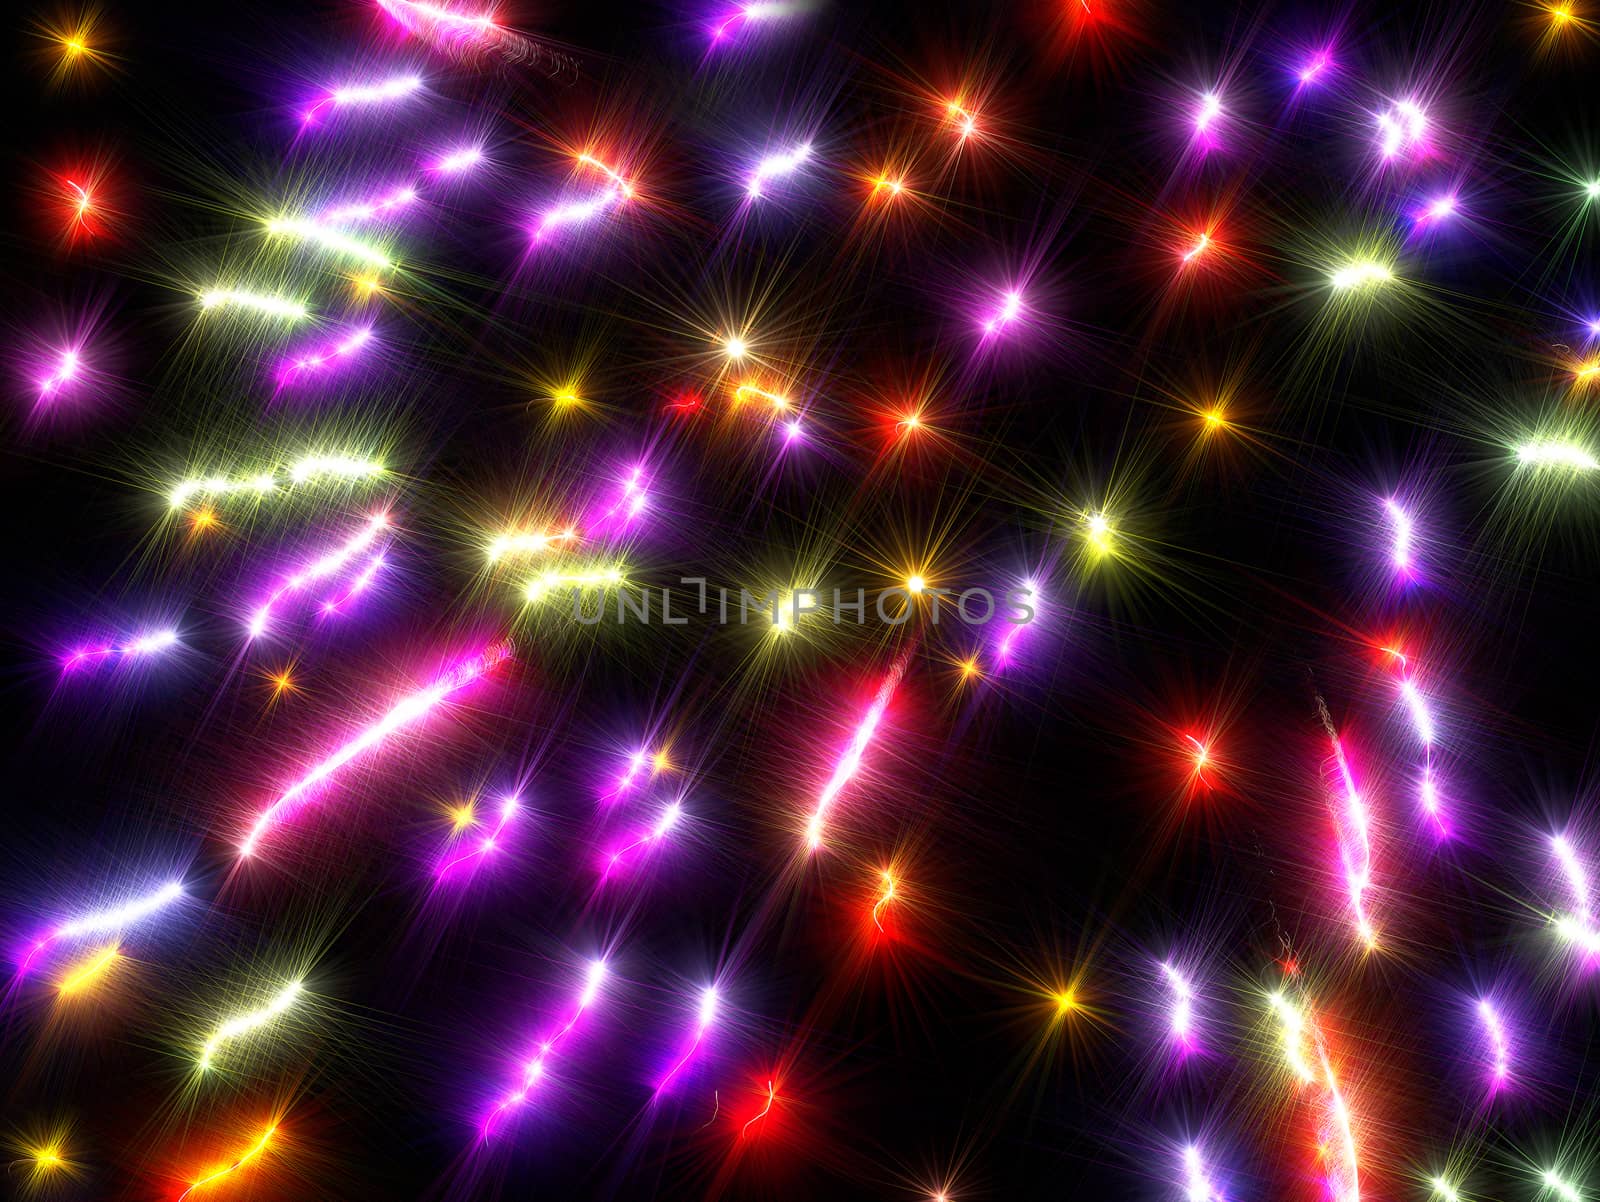 Spectacular fireworks by Krakatuk